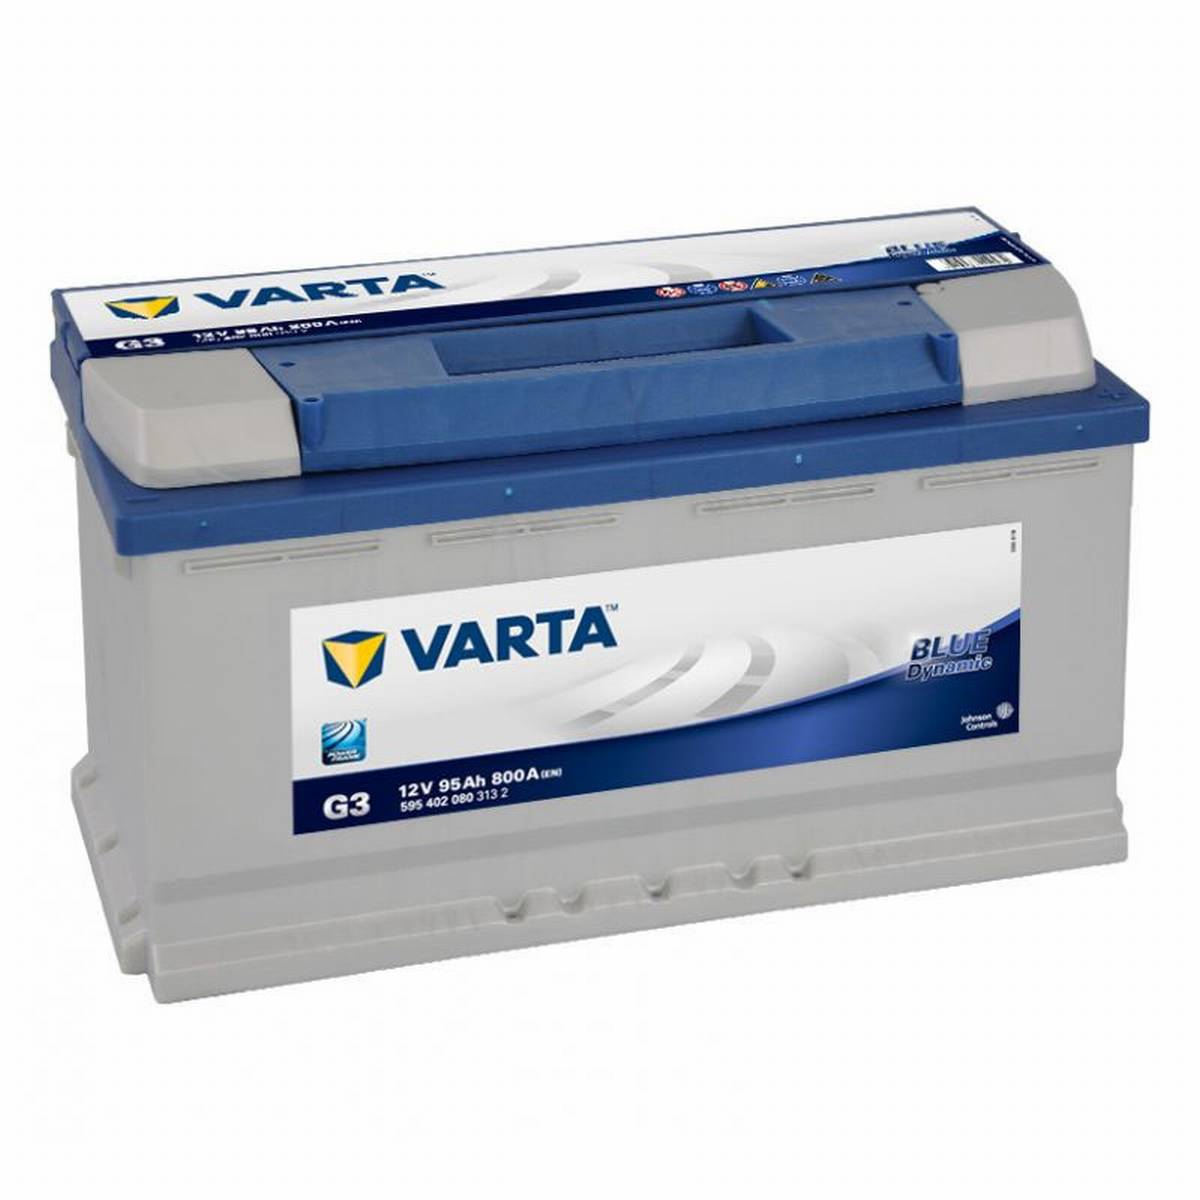 VARTA G3 Blue Dynamic 12V 95Ah 800A Autobatterie 595 402 080